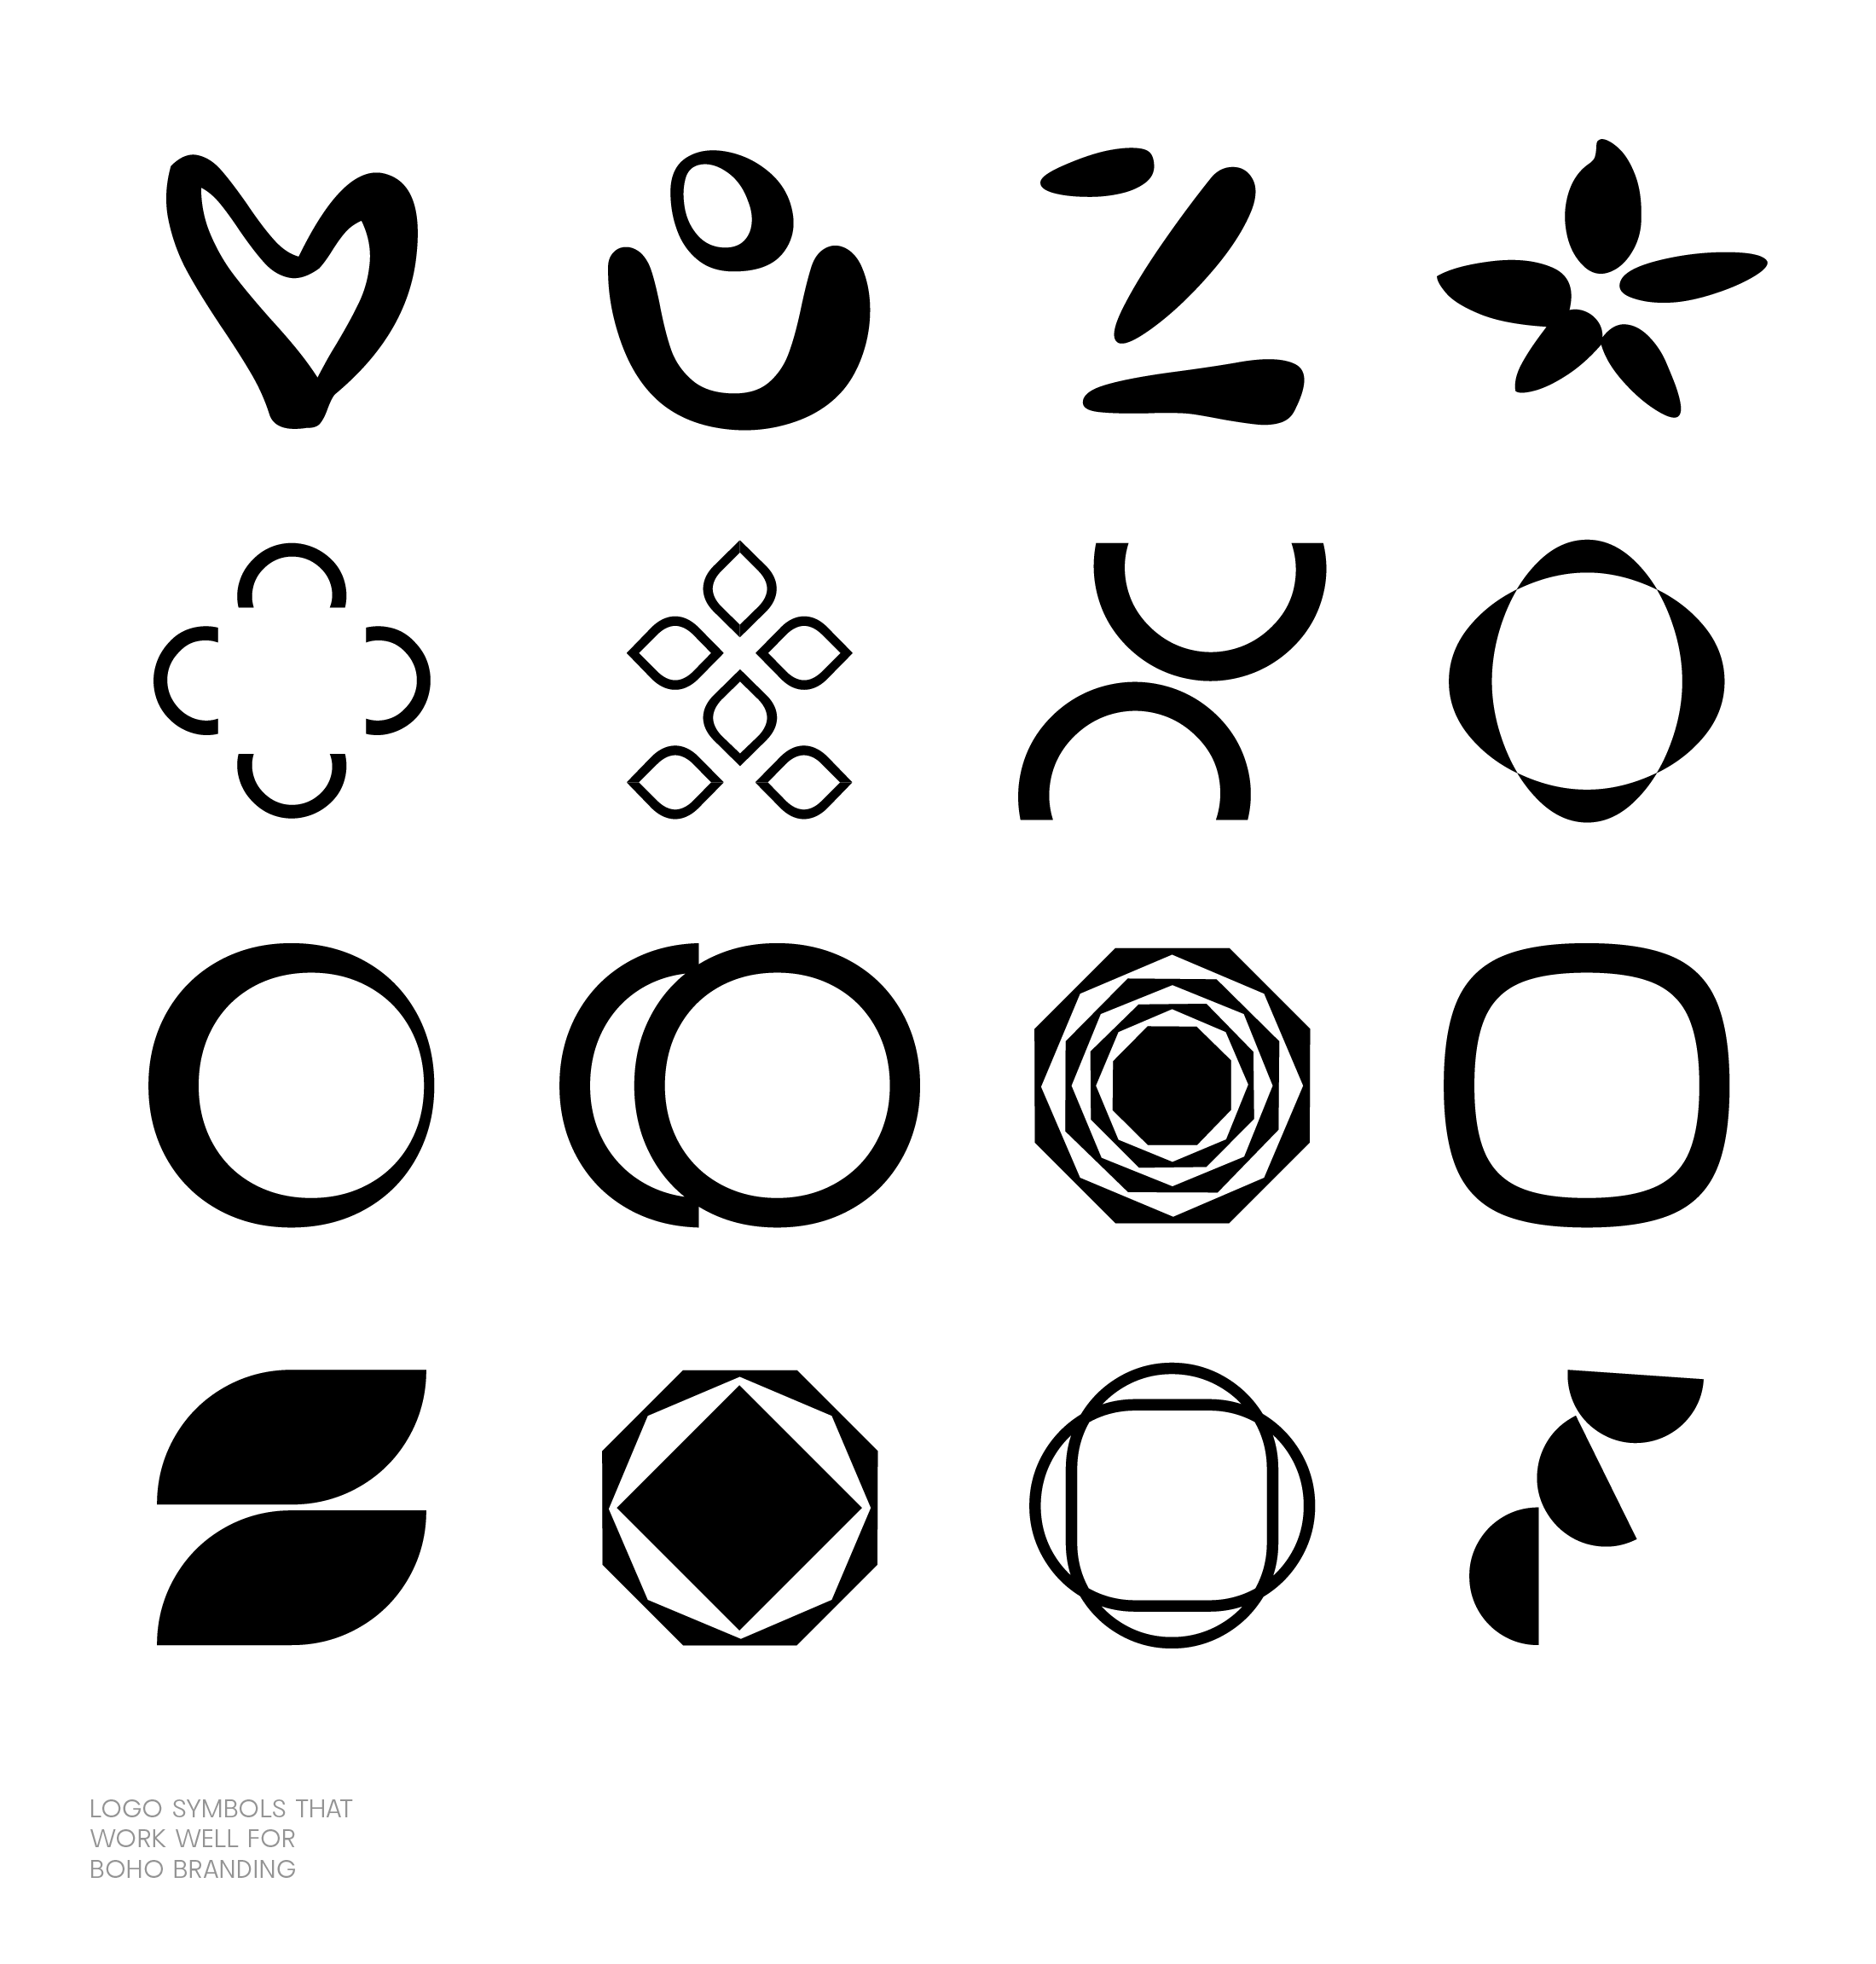 geometric, free-form, and abstract logo symbols